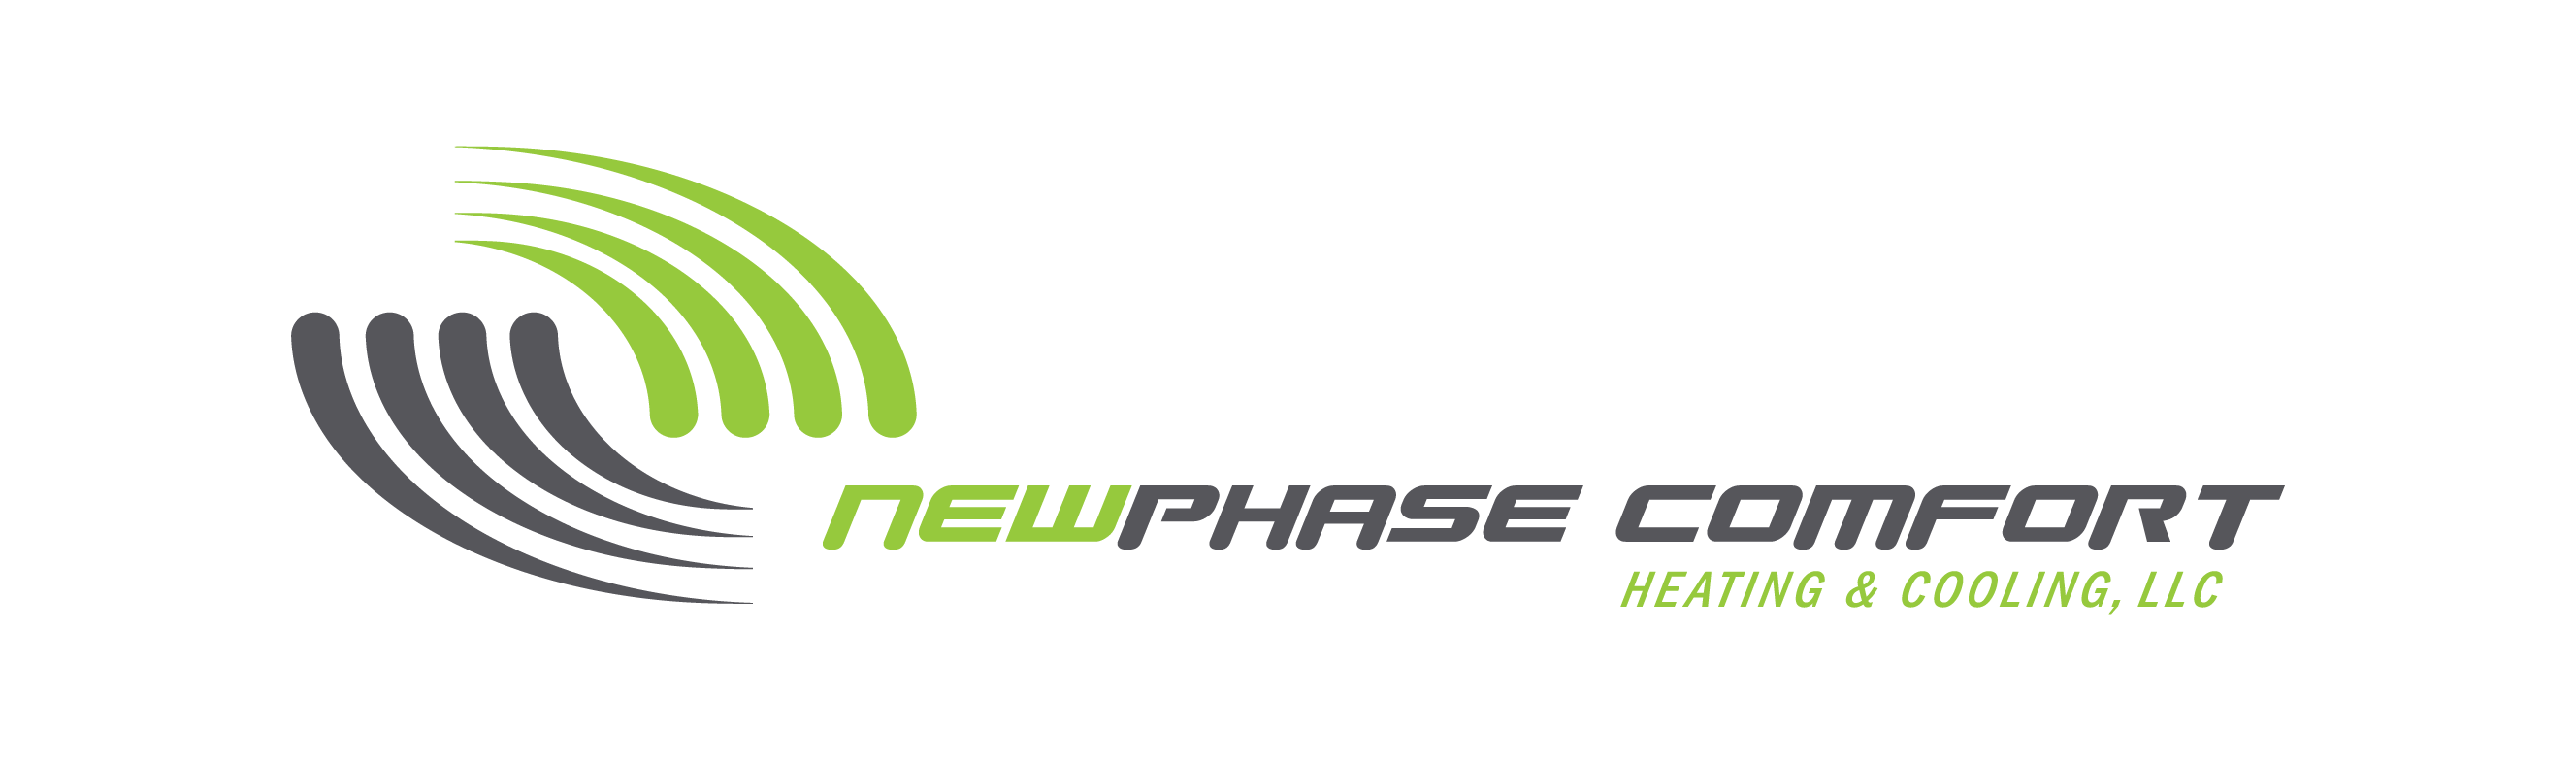 New Phase Comfort Heating & Cooling, LLC Logo